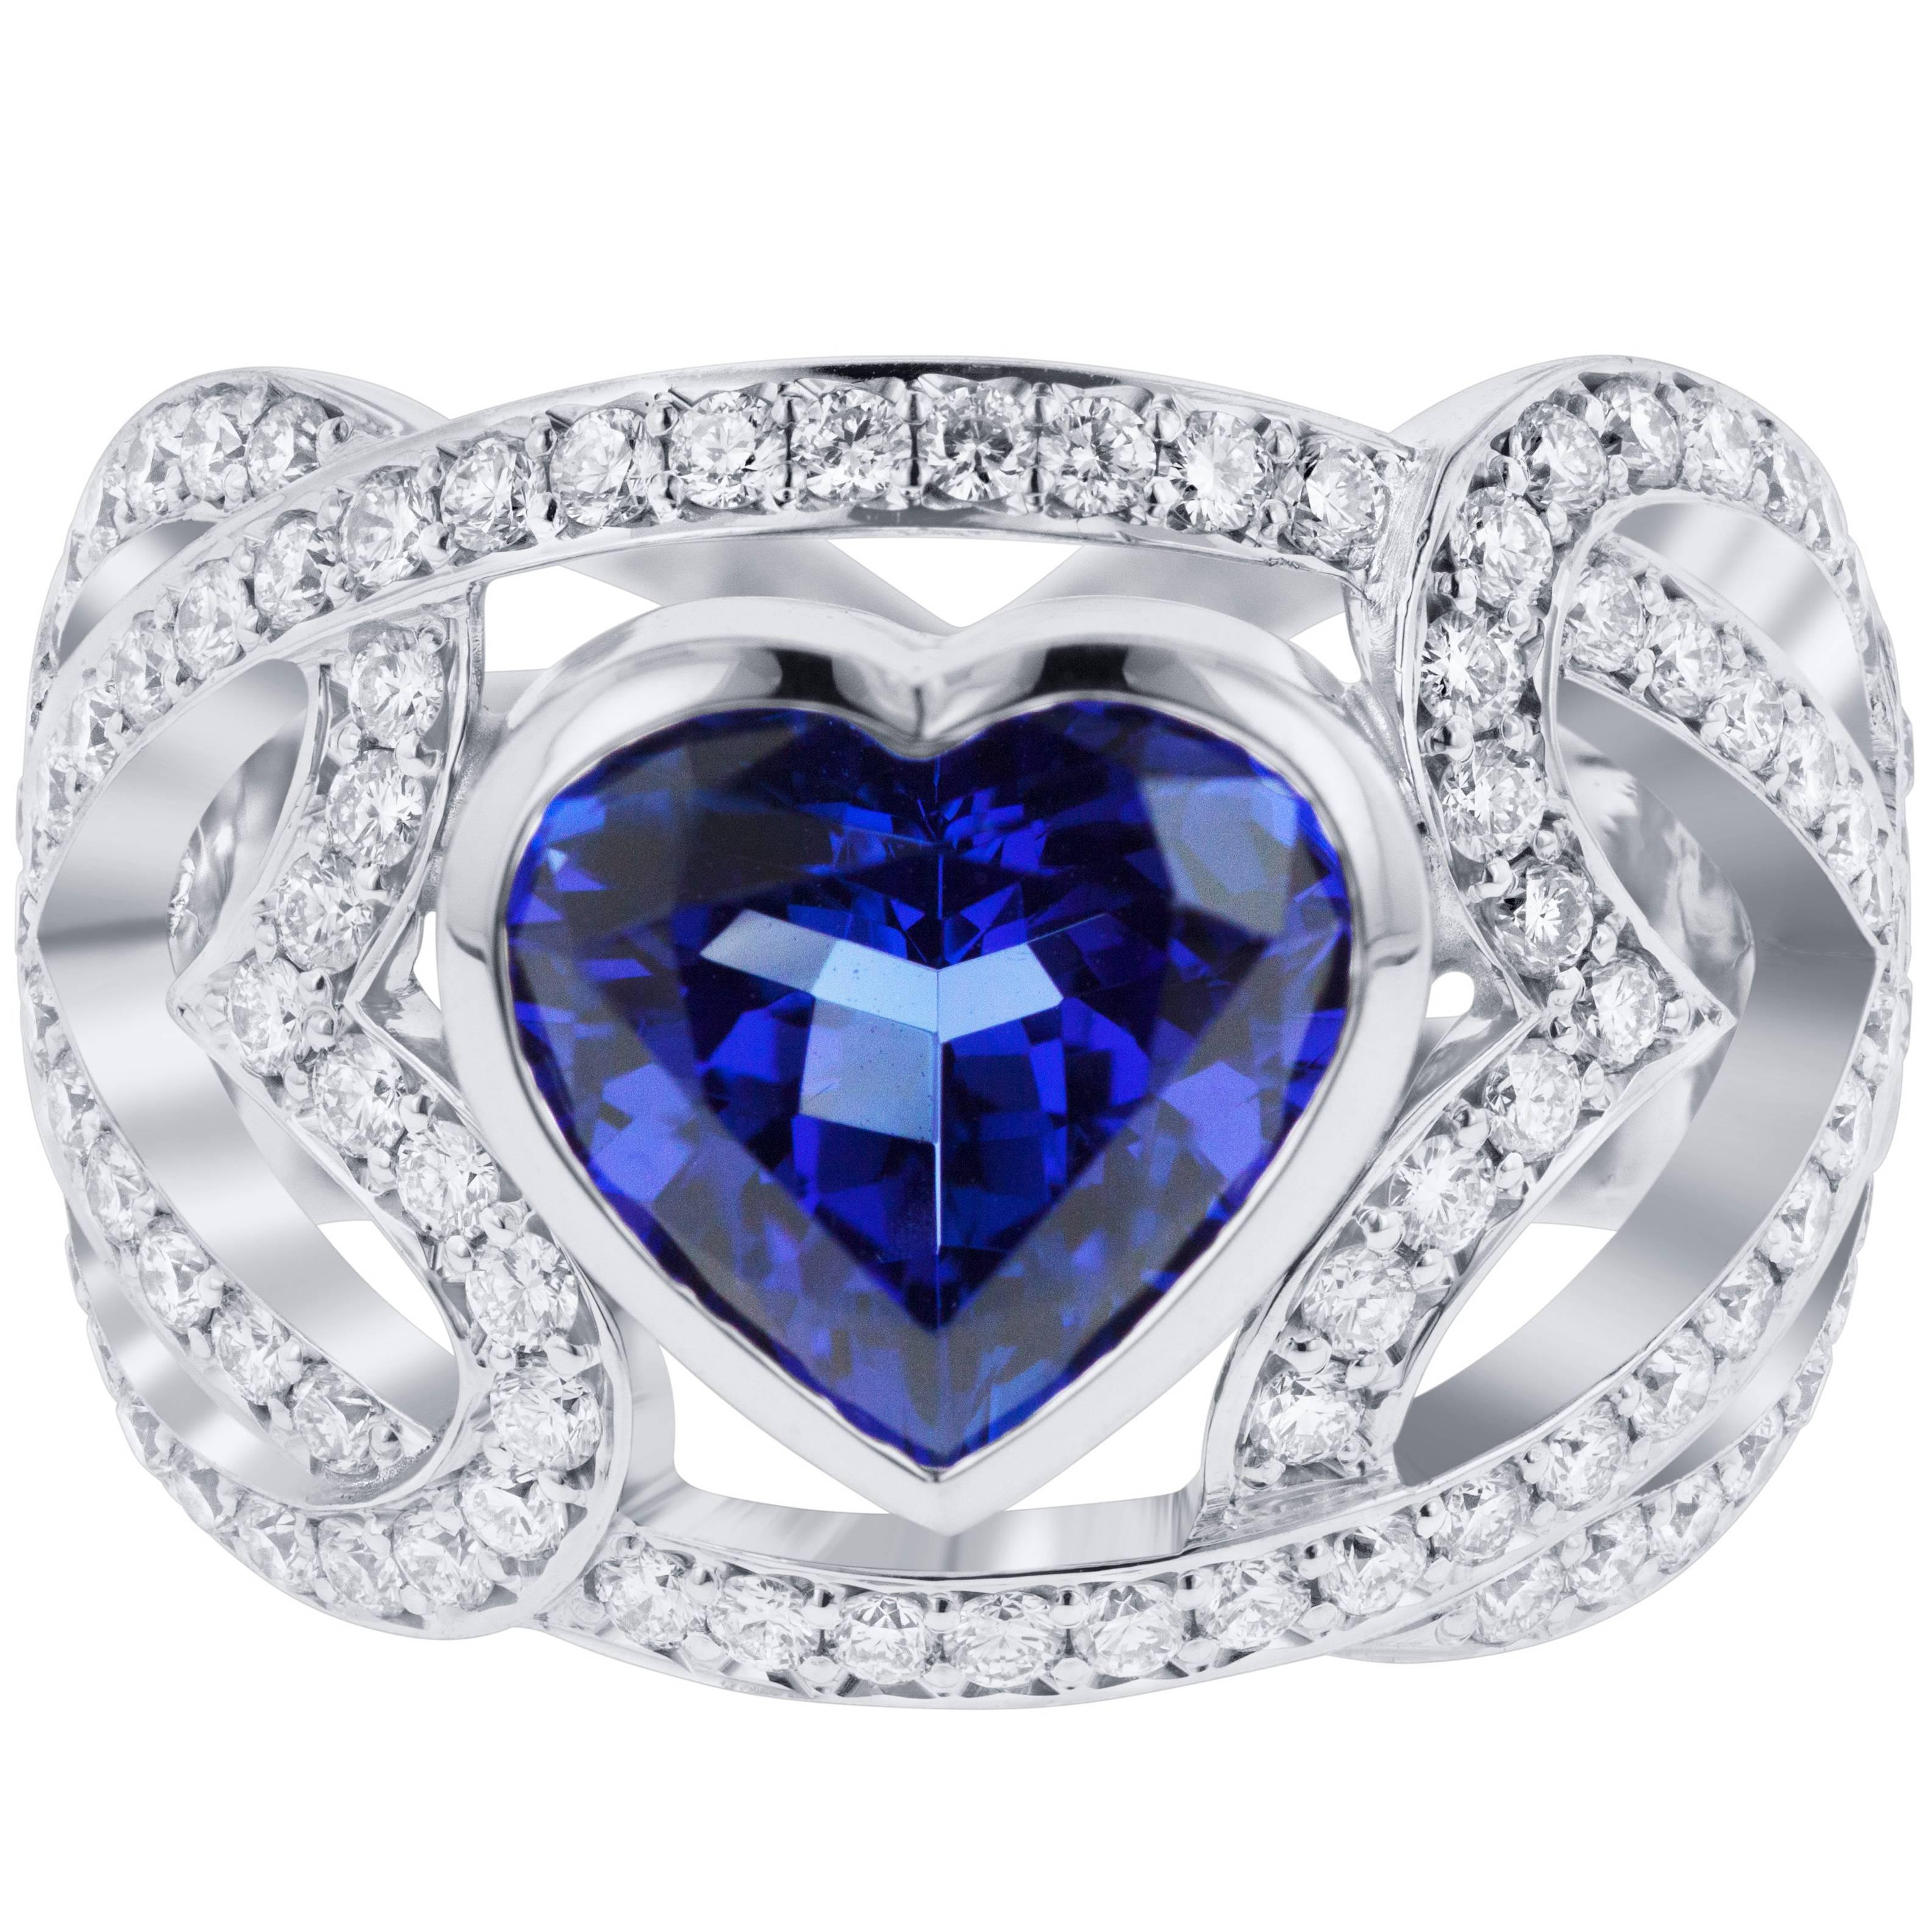 Romantic 3.79 Carat Heart Cut Dark Blue Tanzanite and 2.39 Carat White Diamond R For Sale